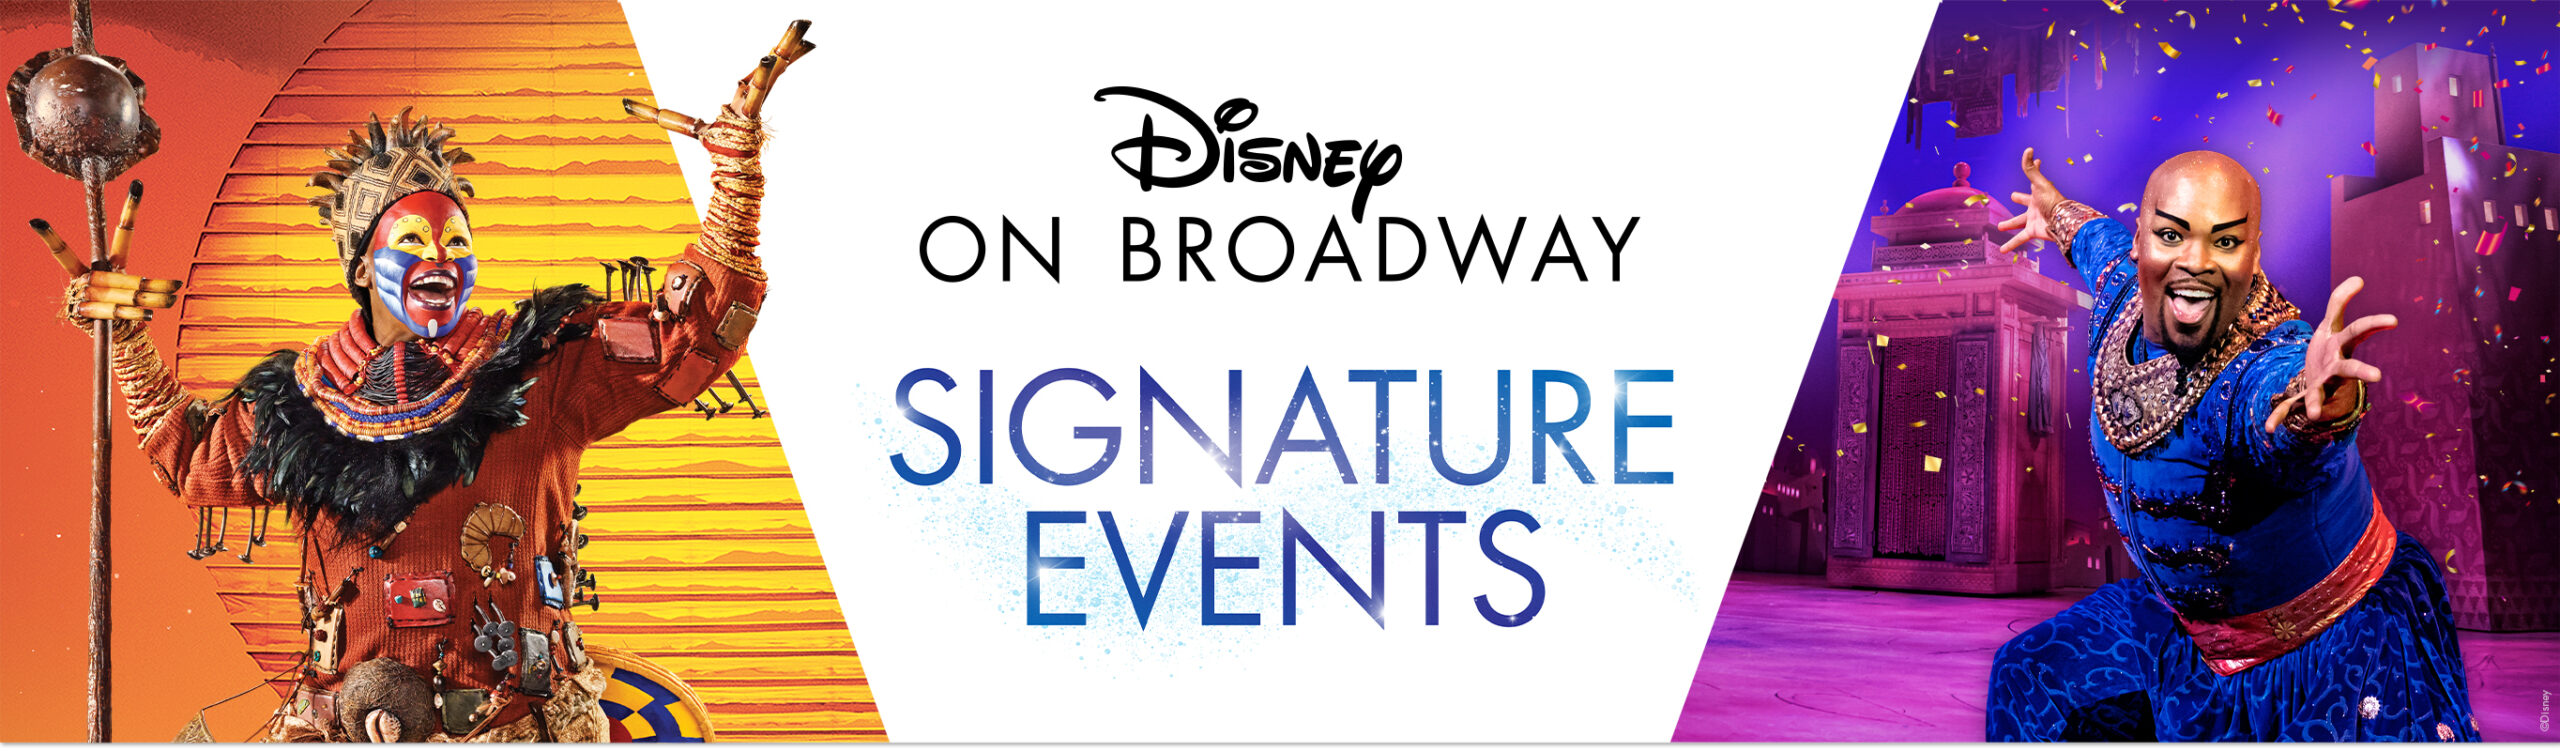 Disney on Broadway Signature Events